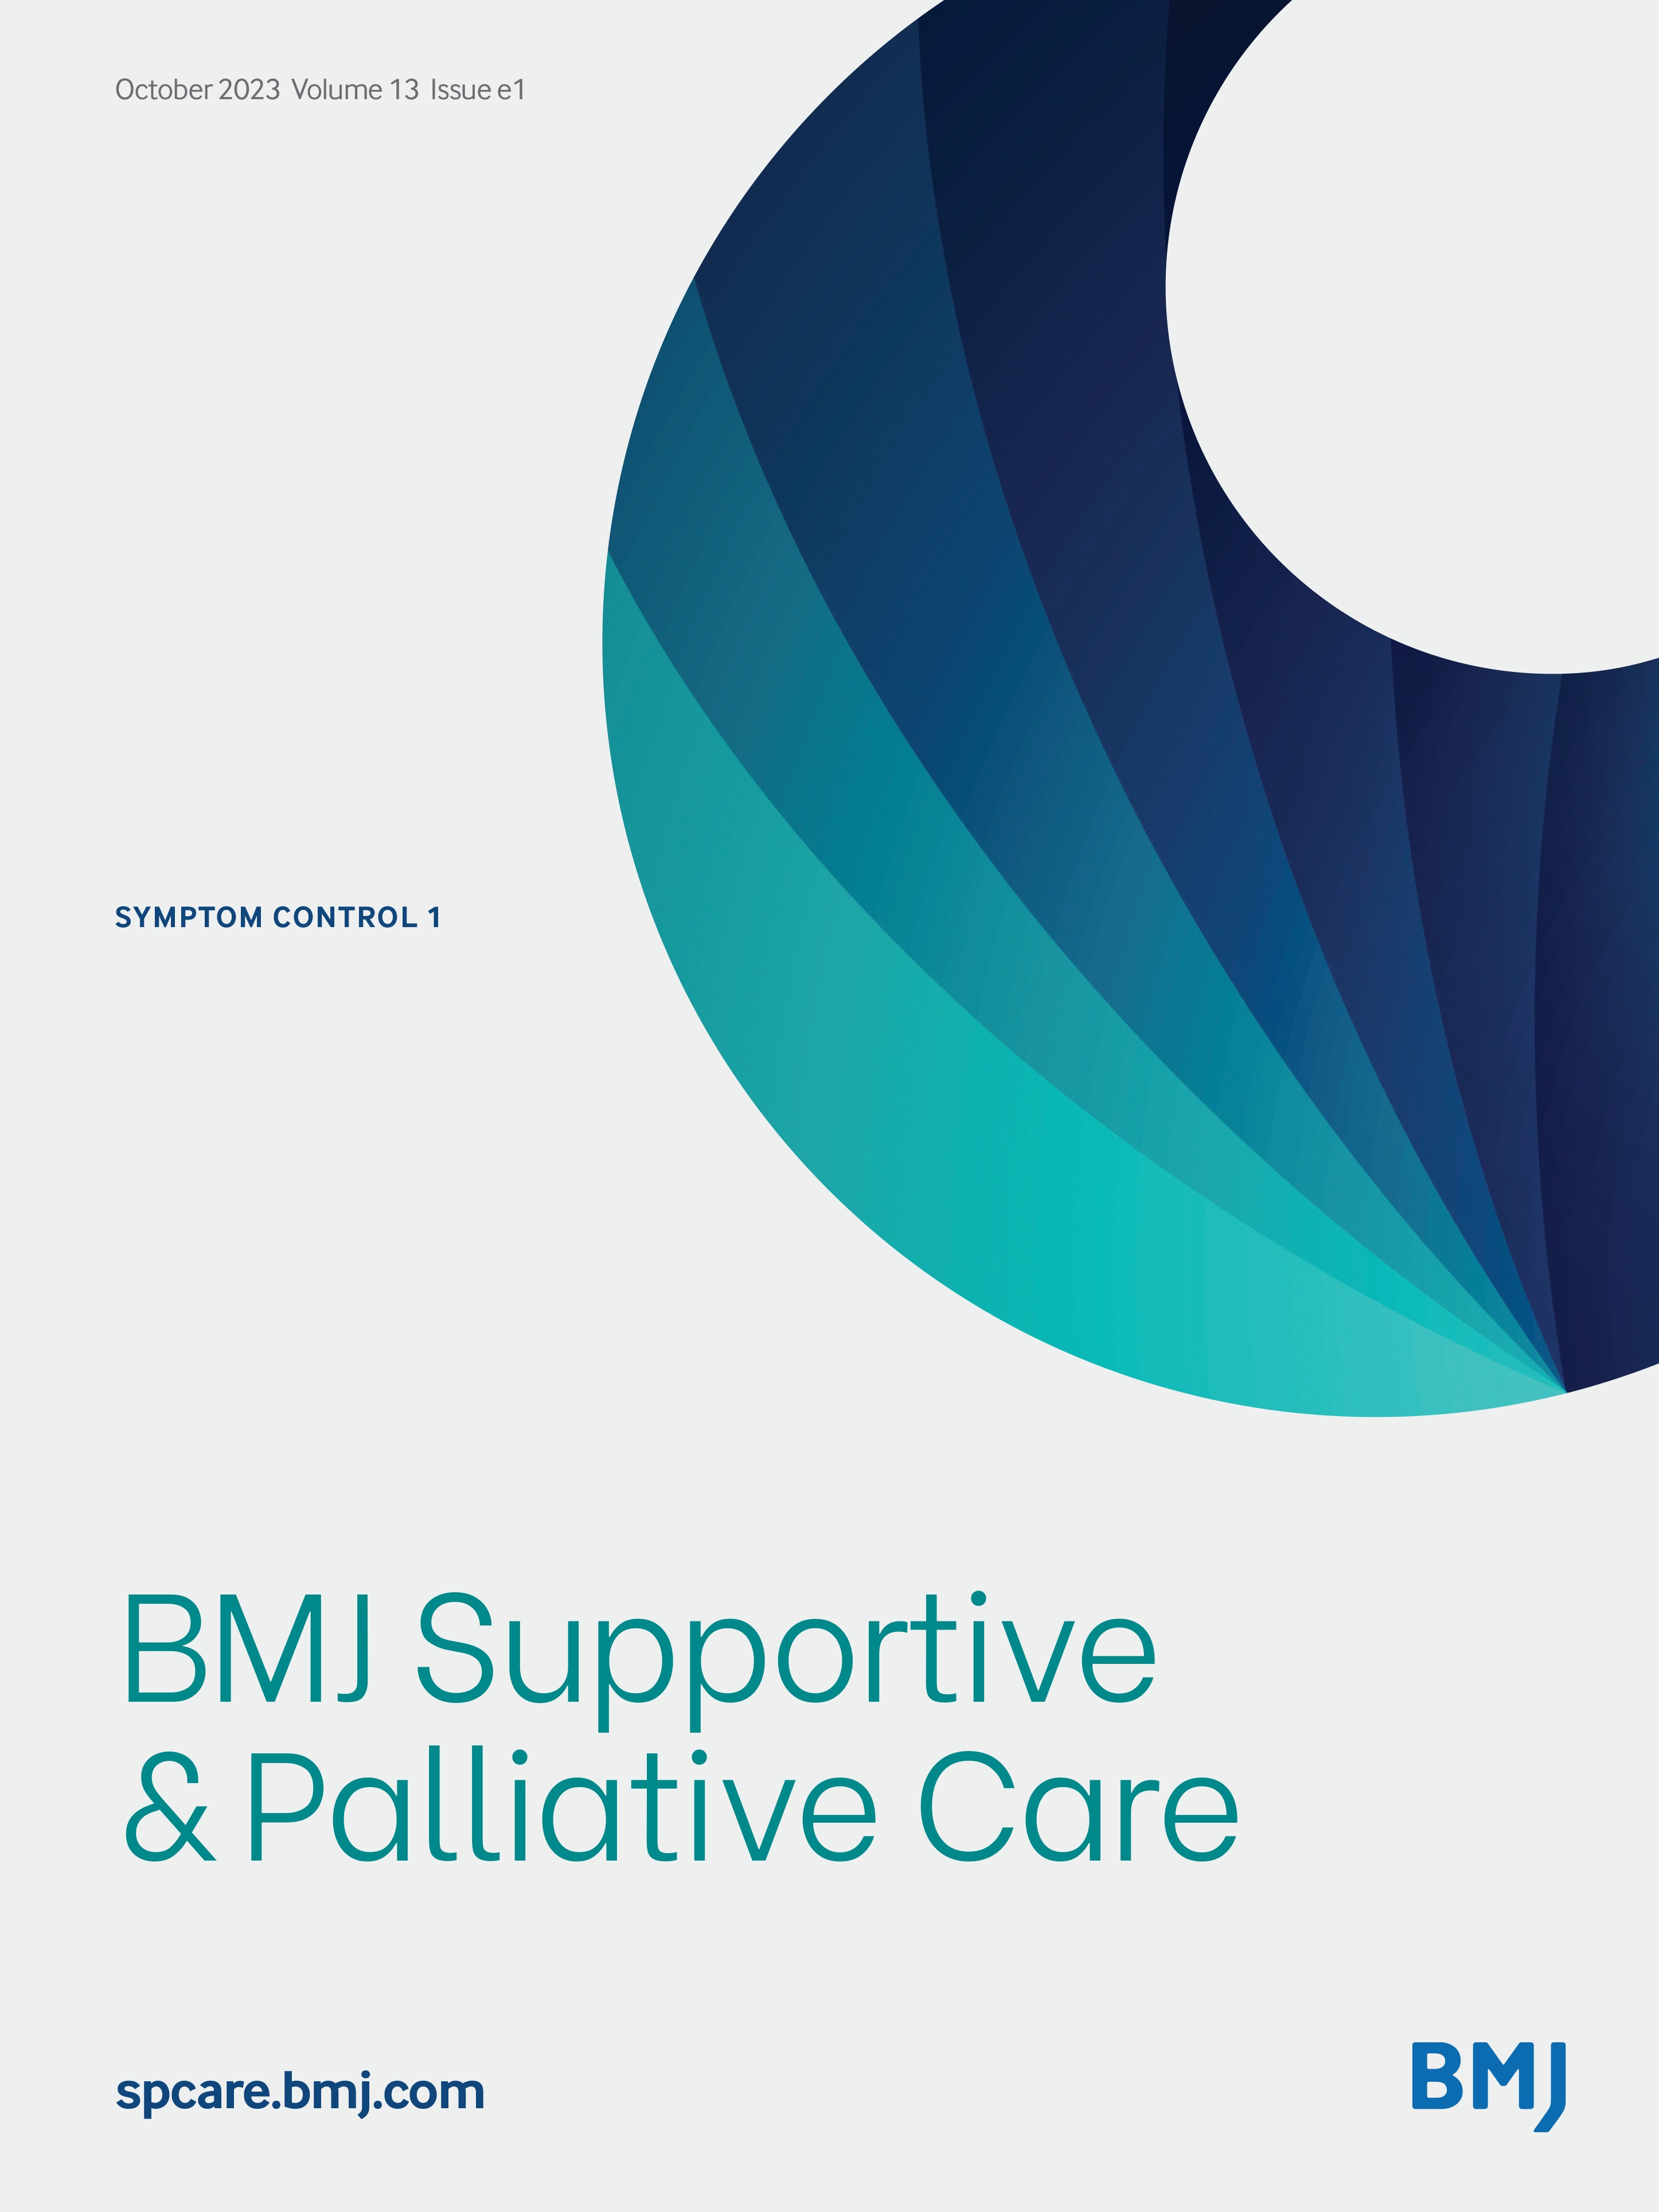 Palliative care pain control: inpatient consultation versus corounding models compared